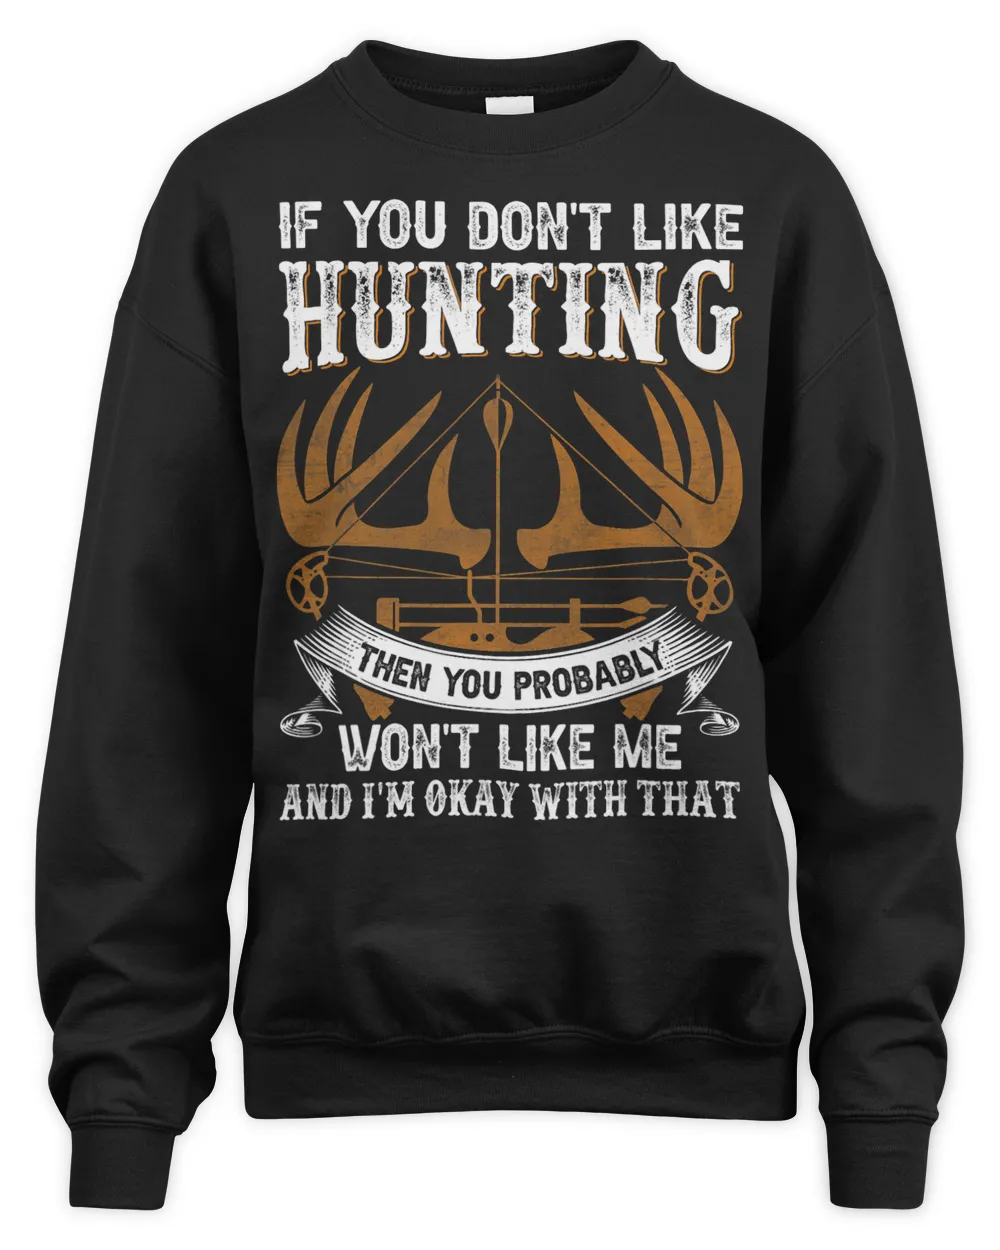 Hunting deer trophy best shot Hunting gear